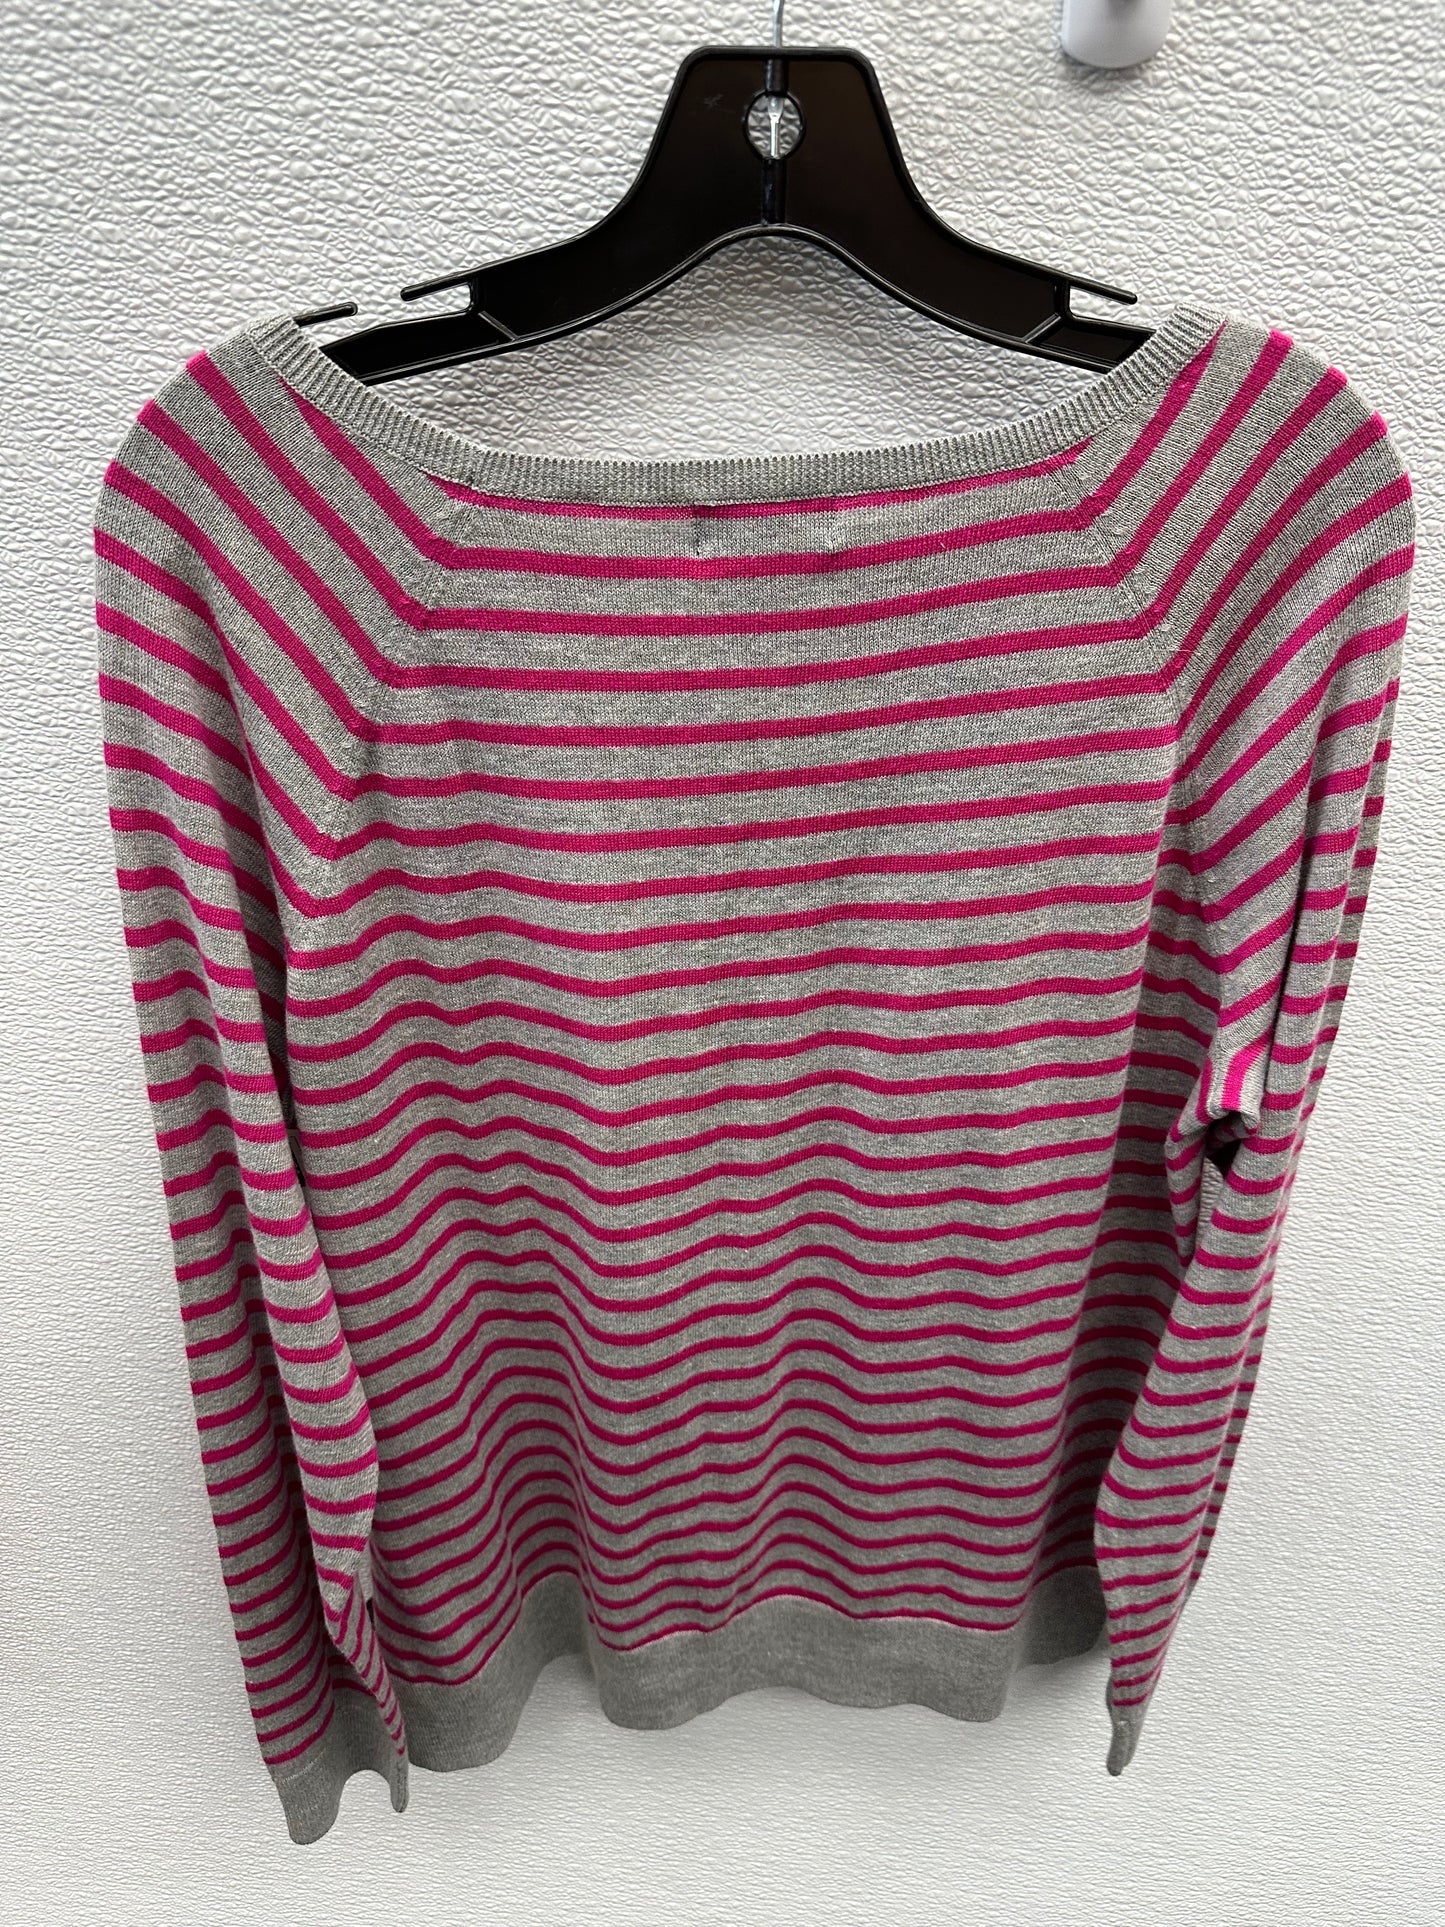 Sweater By Ana  Size: Xl